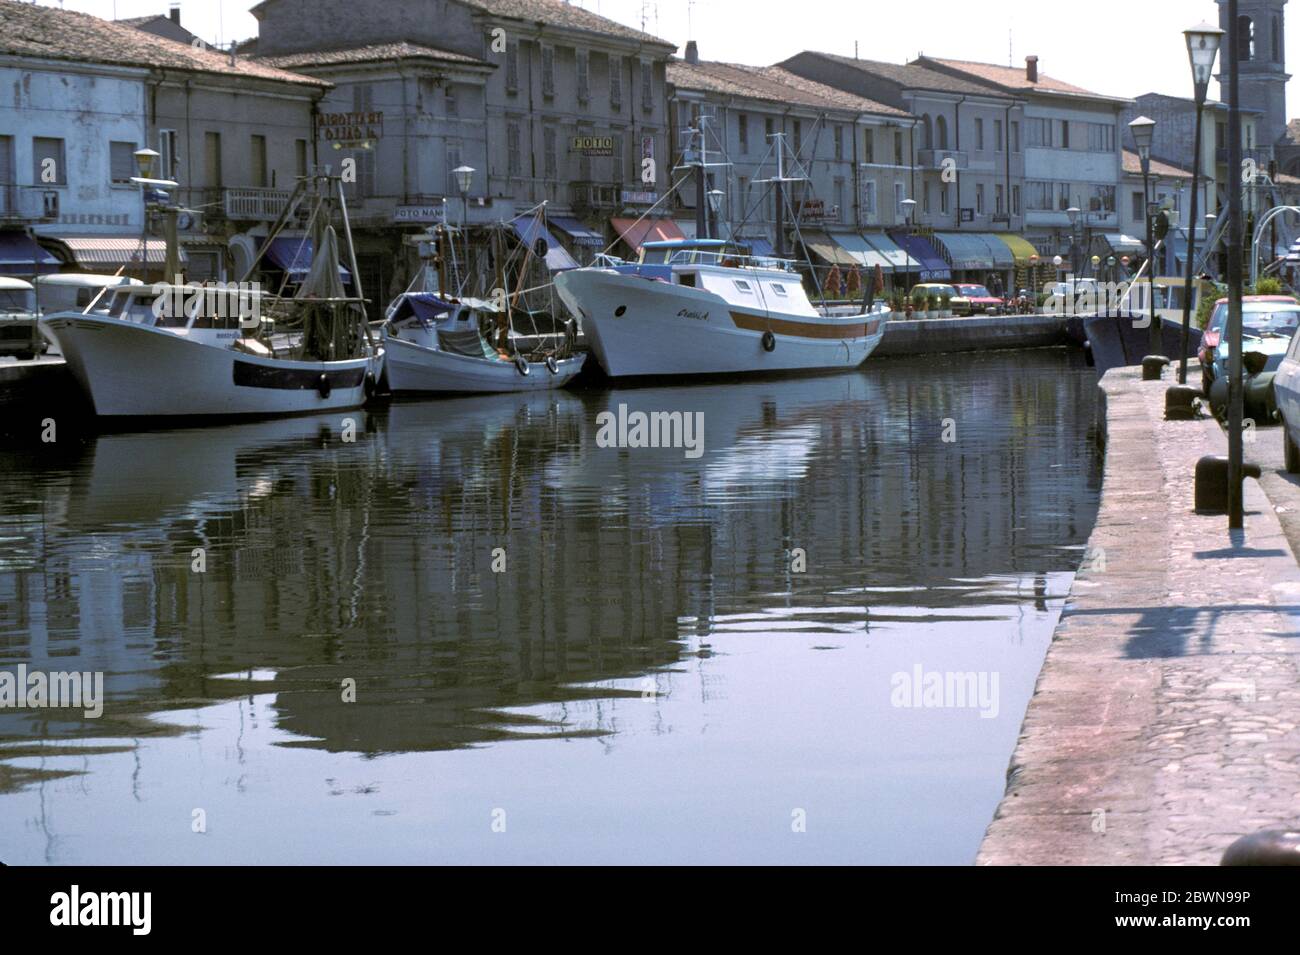 El puerto de Cesenatico, Emilia-Romagna, Italia, foto en 1979 Foto de stock